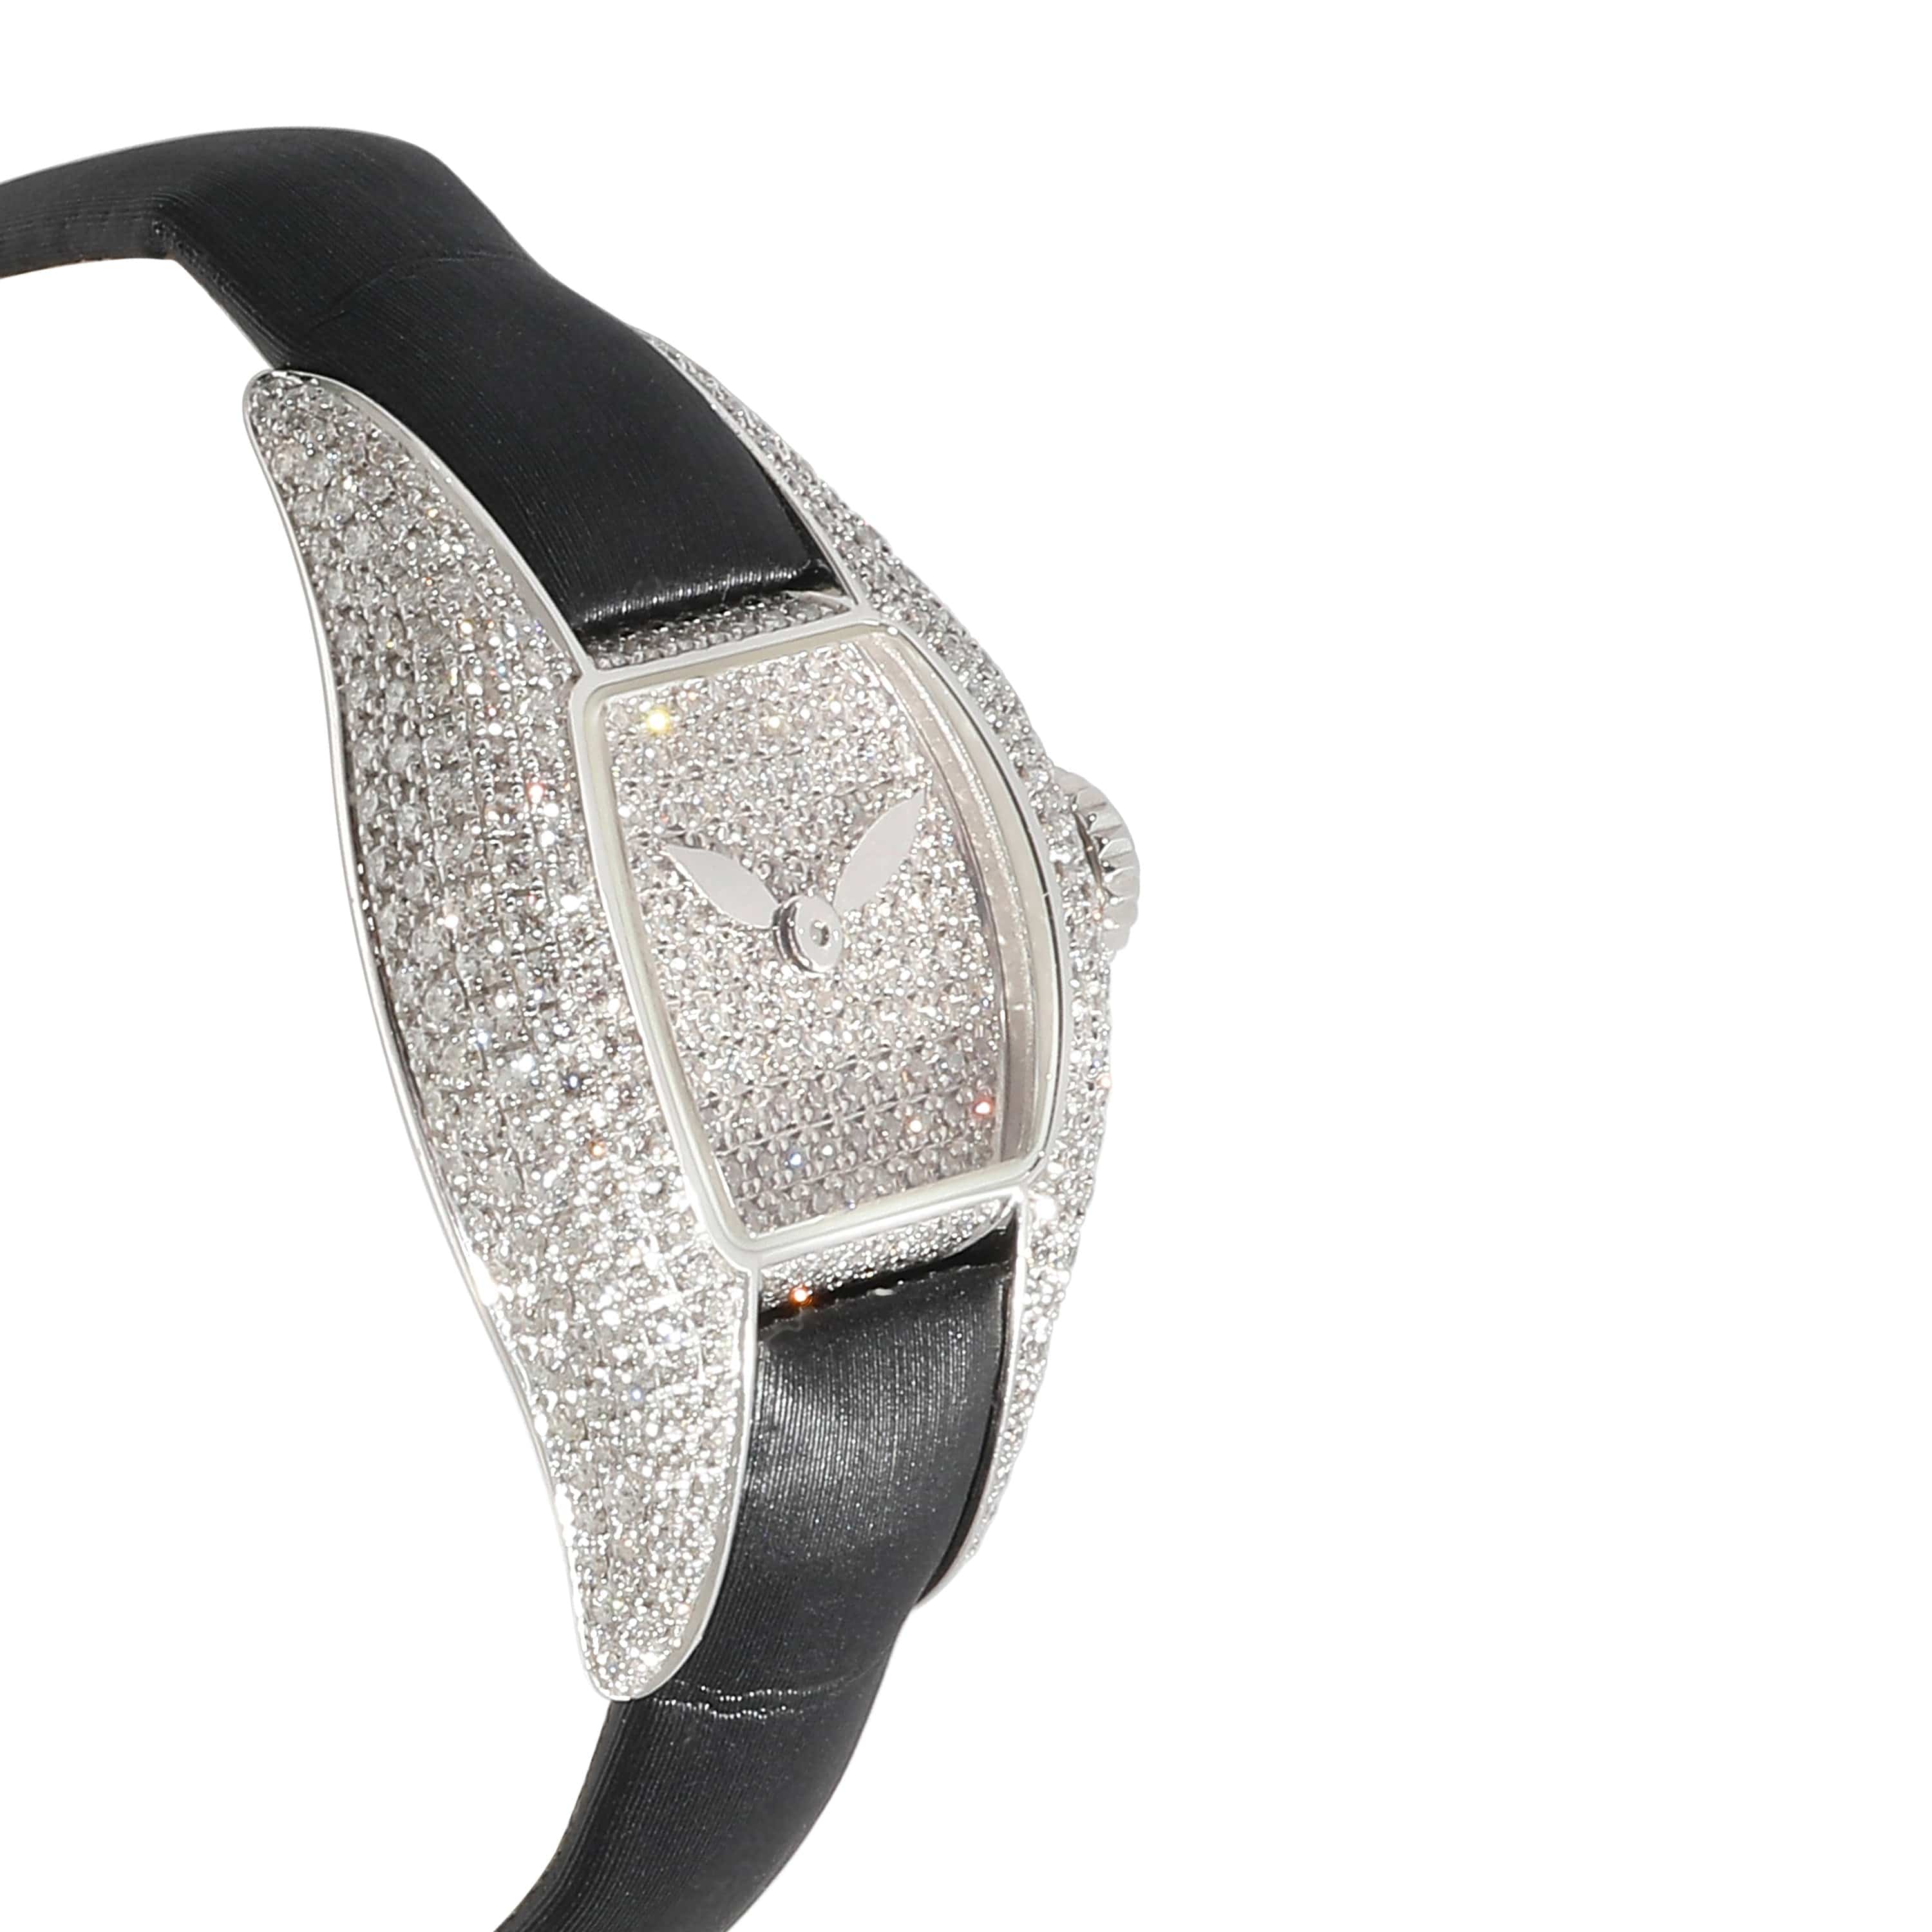 Girard Perregaux Girard Perregaux  26620 Women's Watch in 18k White Gold